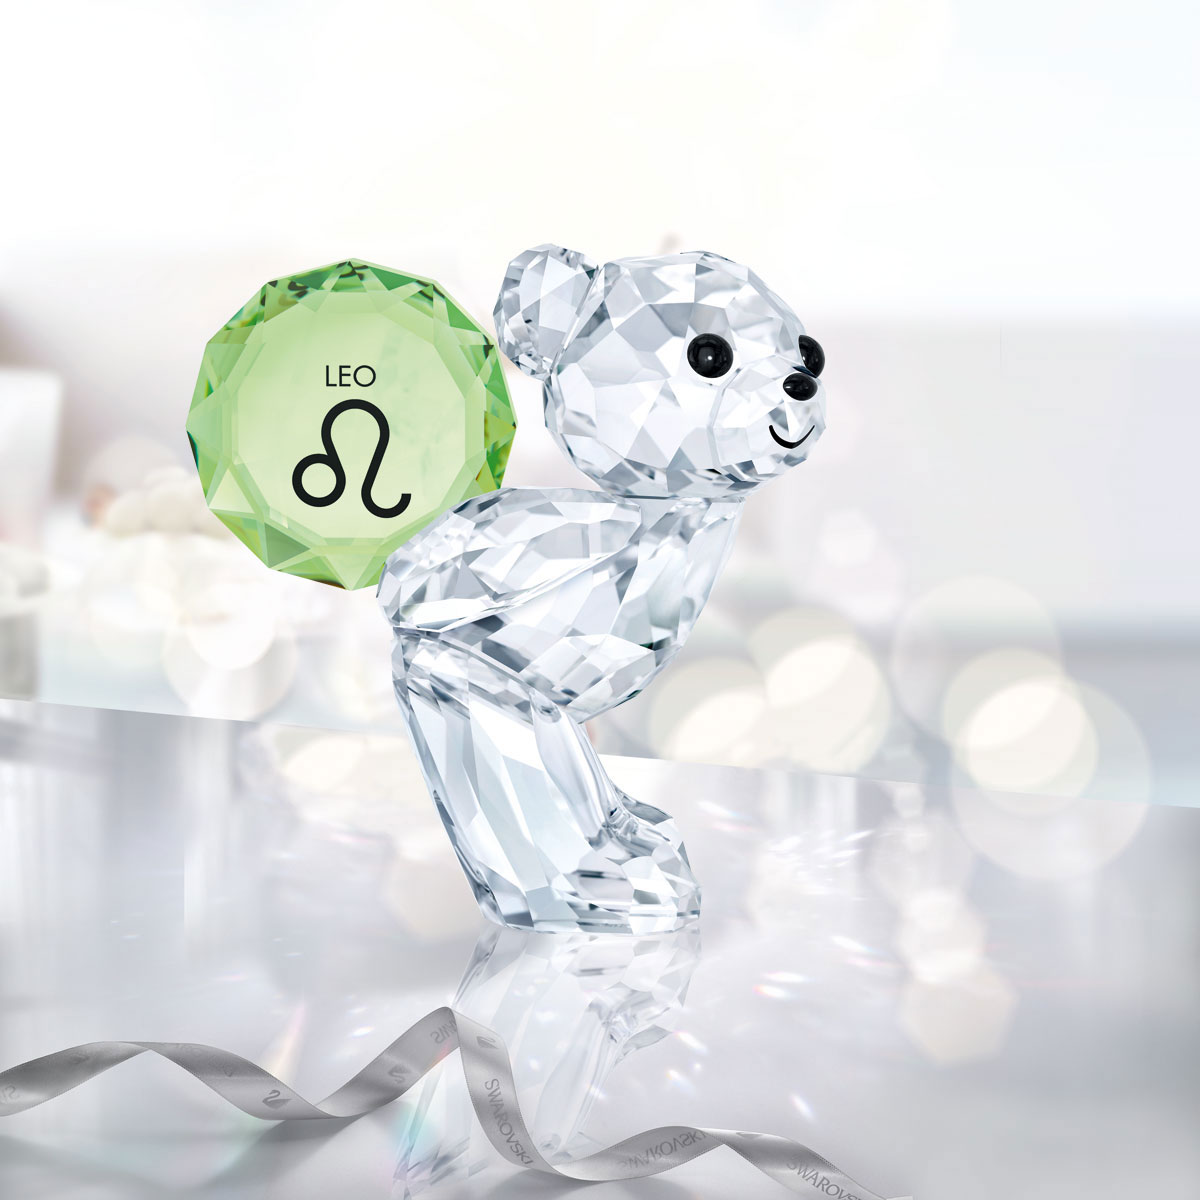 Swarovski Crystal Kris Bear Horoscope Leo Sculpture